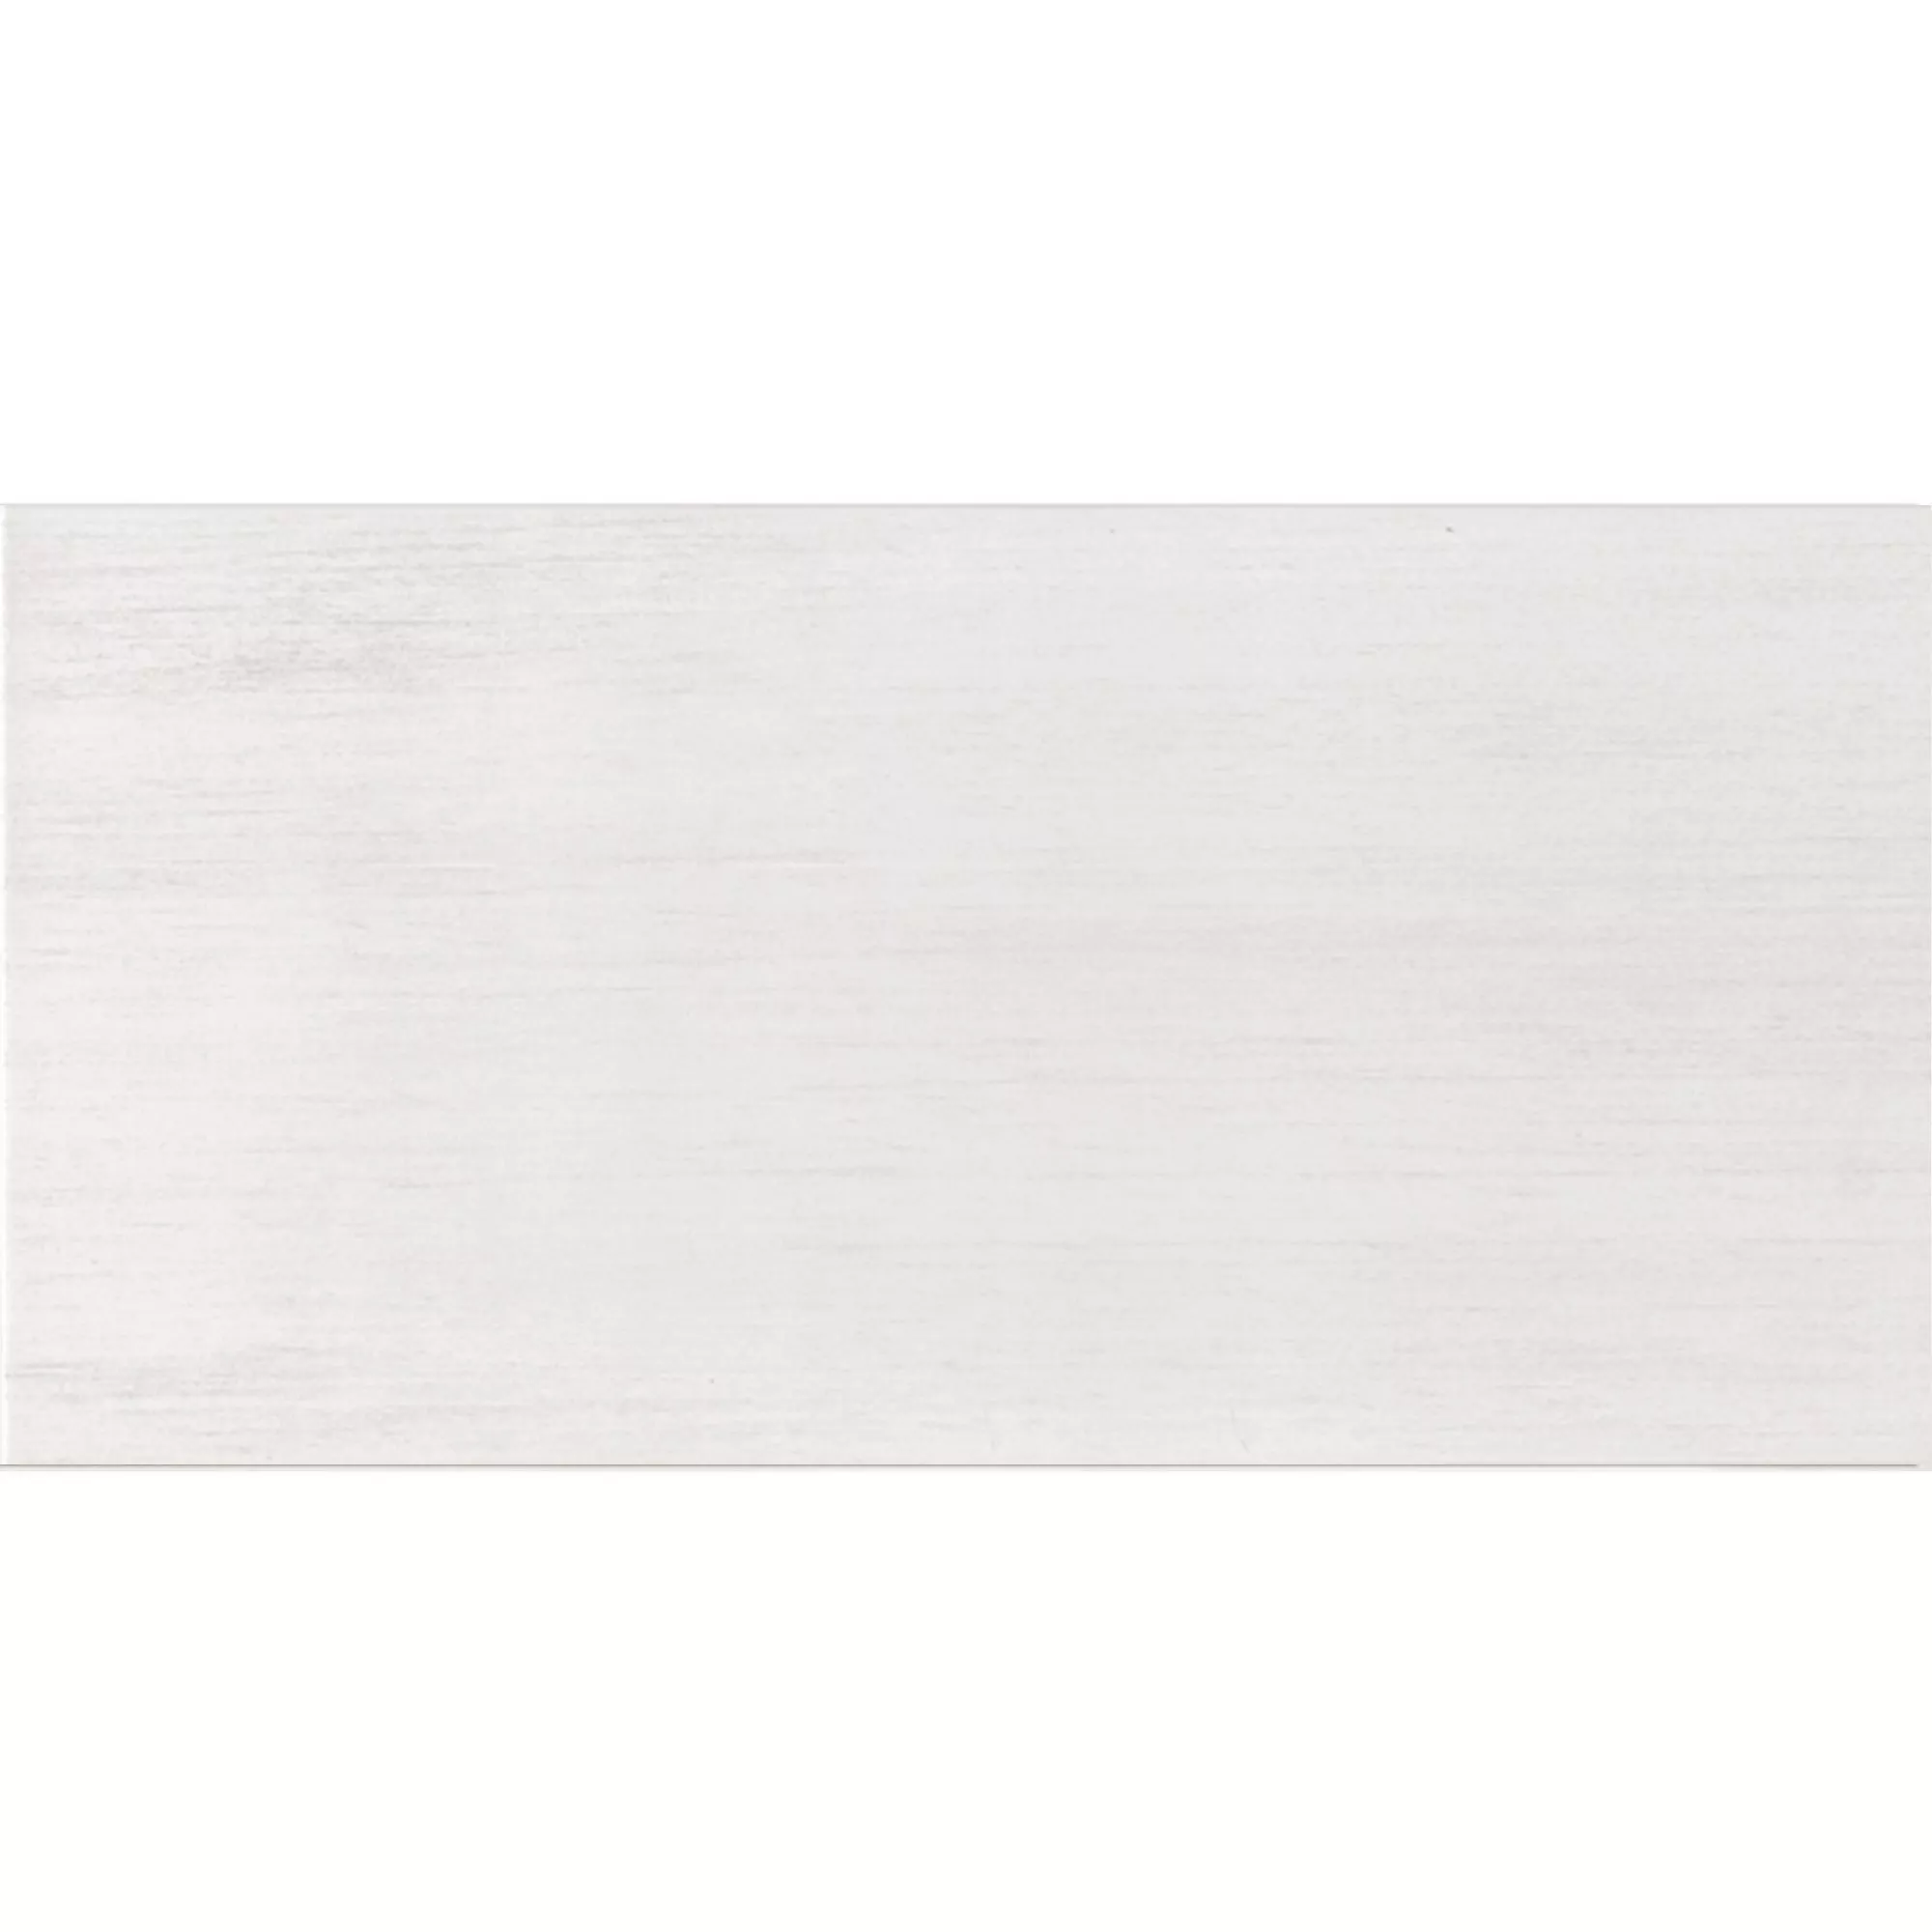 Wall Tiles Meyrin White 30x60cm